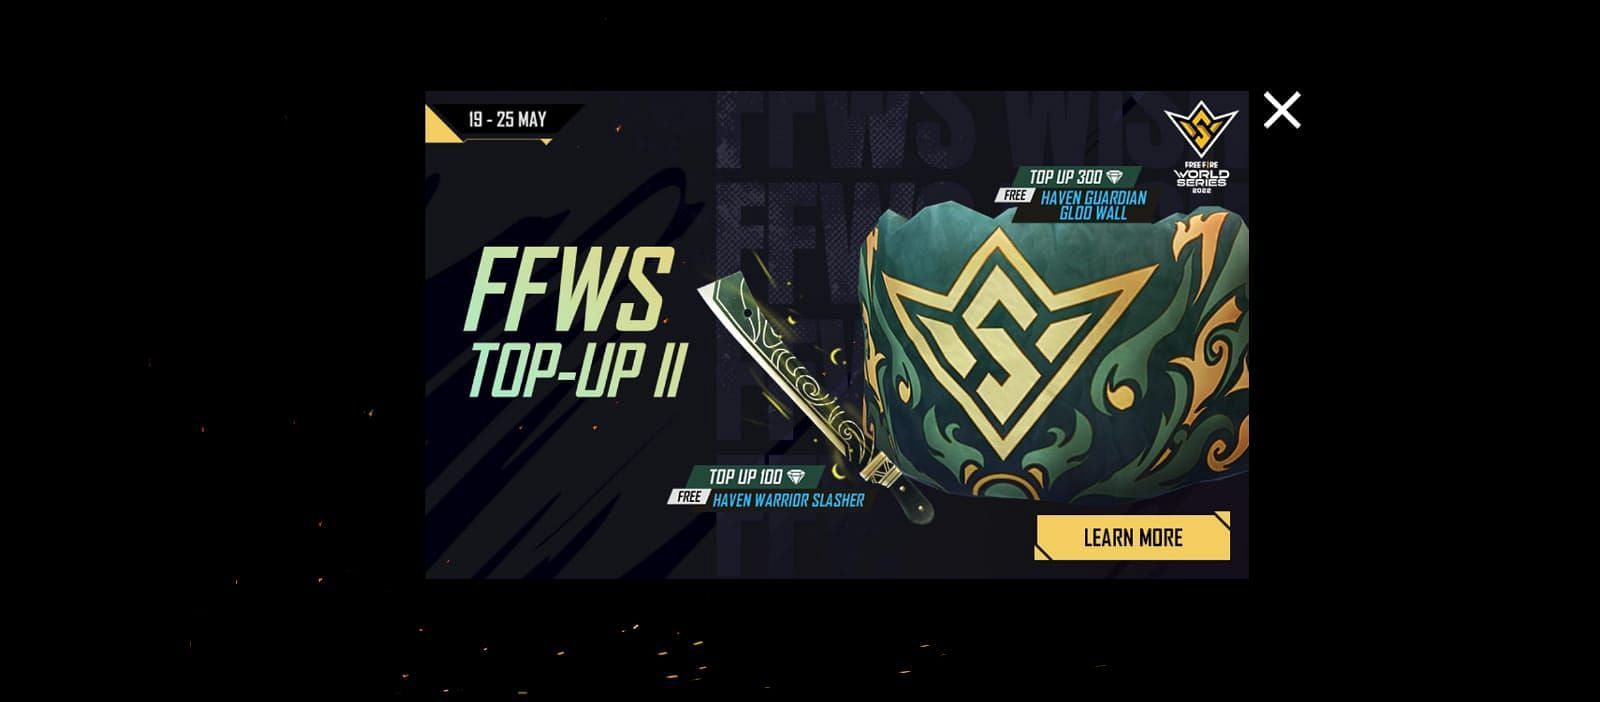 The new FFWS Top-Up II event (Image via Garena)